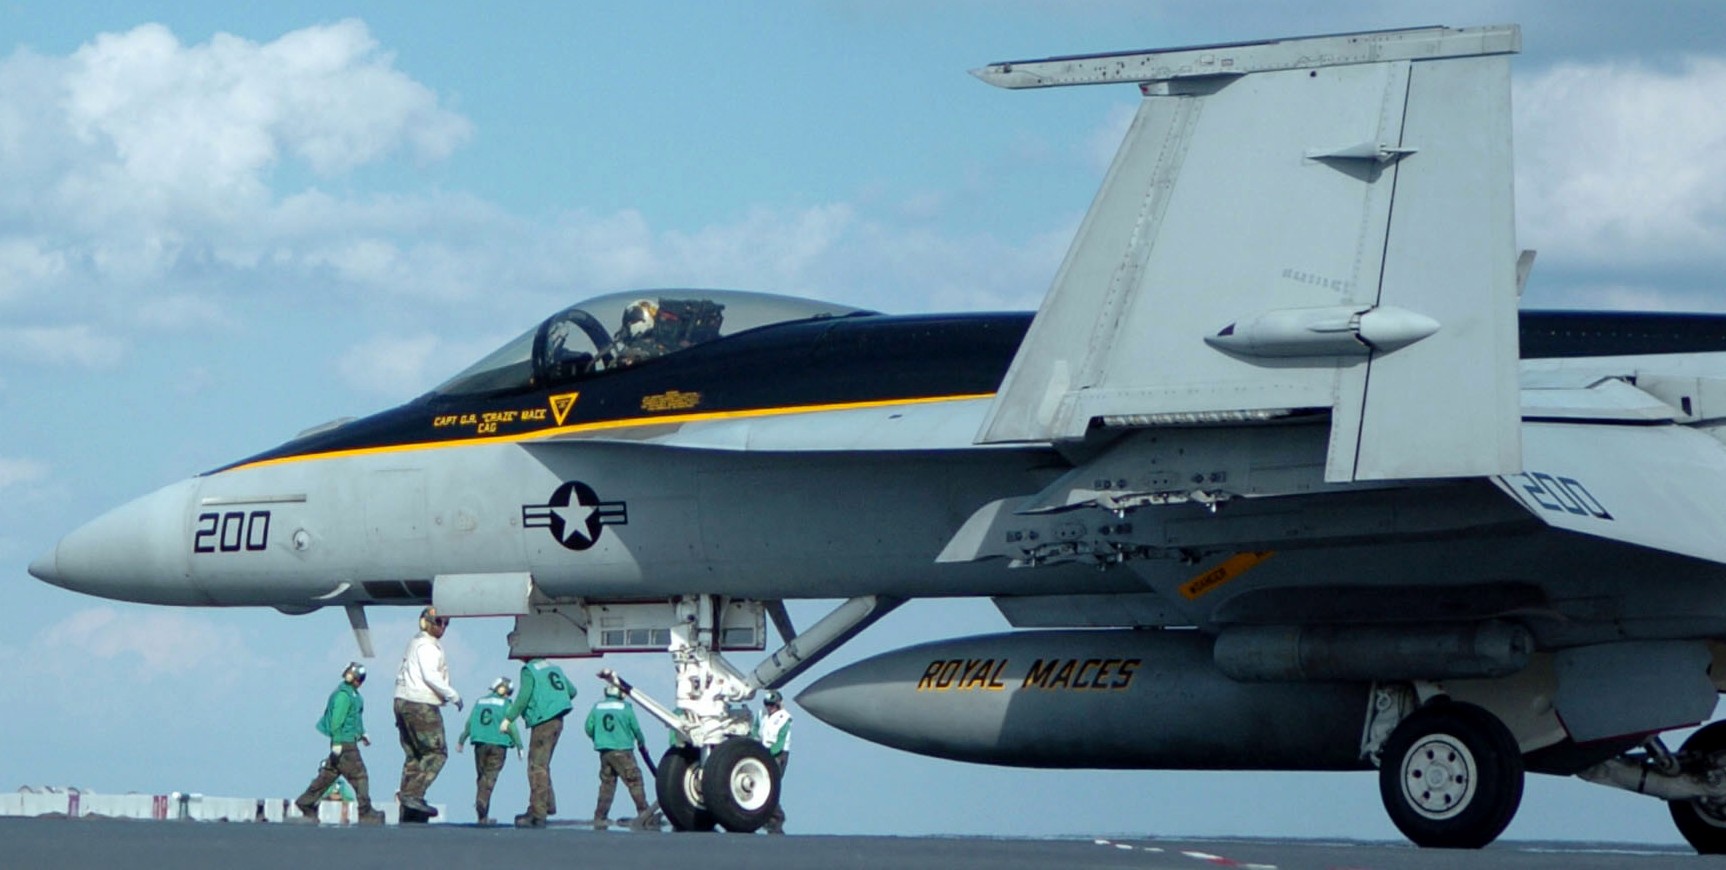 vfa-27 royal maces strike fighter squadron f/a-18e super hornet cv-63 uss kitty hawk cvw-5 us navy 15